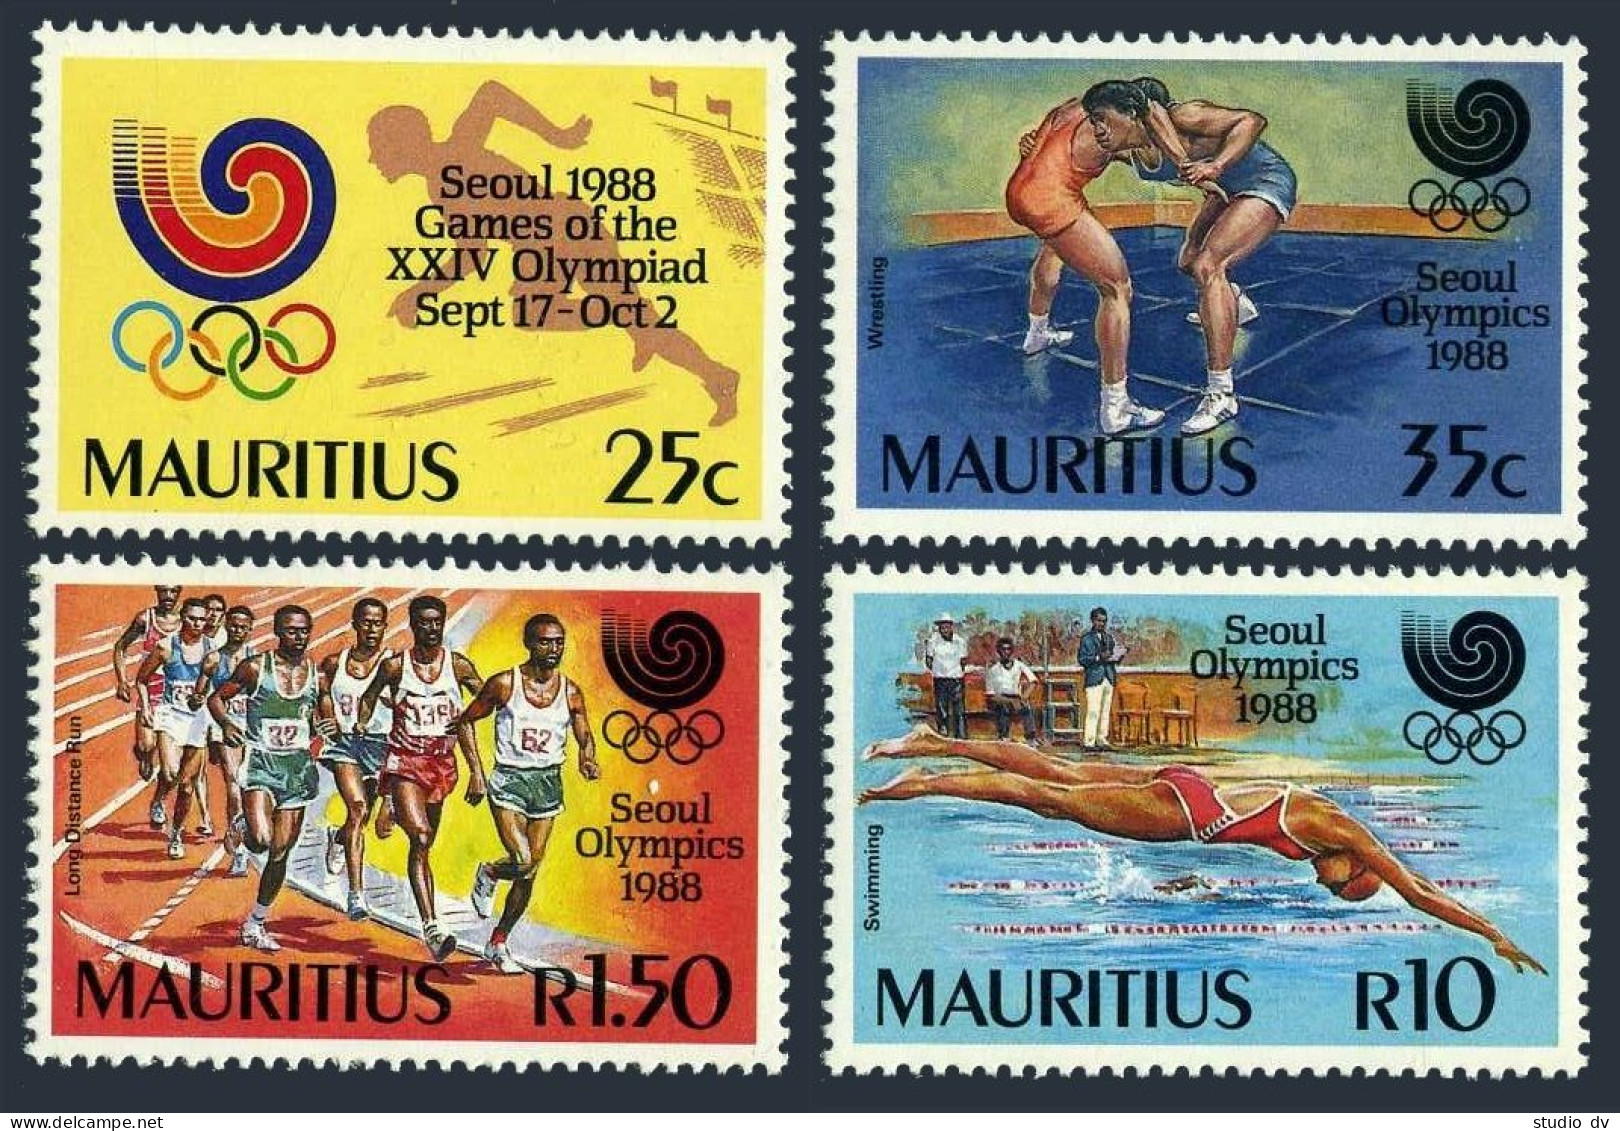 Mauritius 678-681, MNH. Michel 674-677. Olympics Seoul-1988. Wrestling, Swimming - Maurice (1968-...)